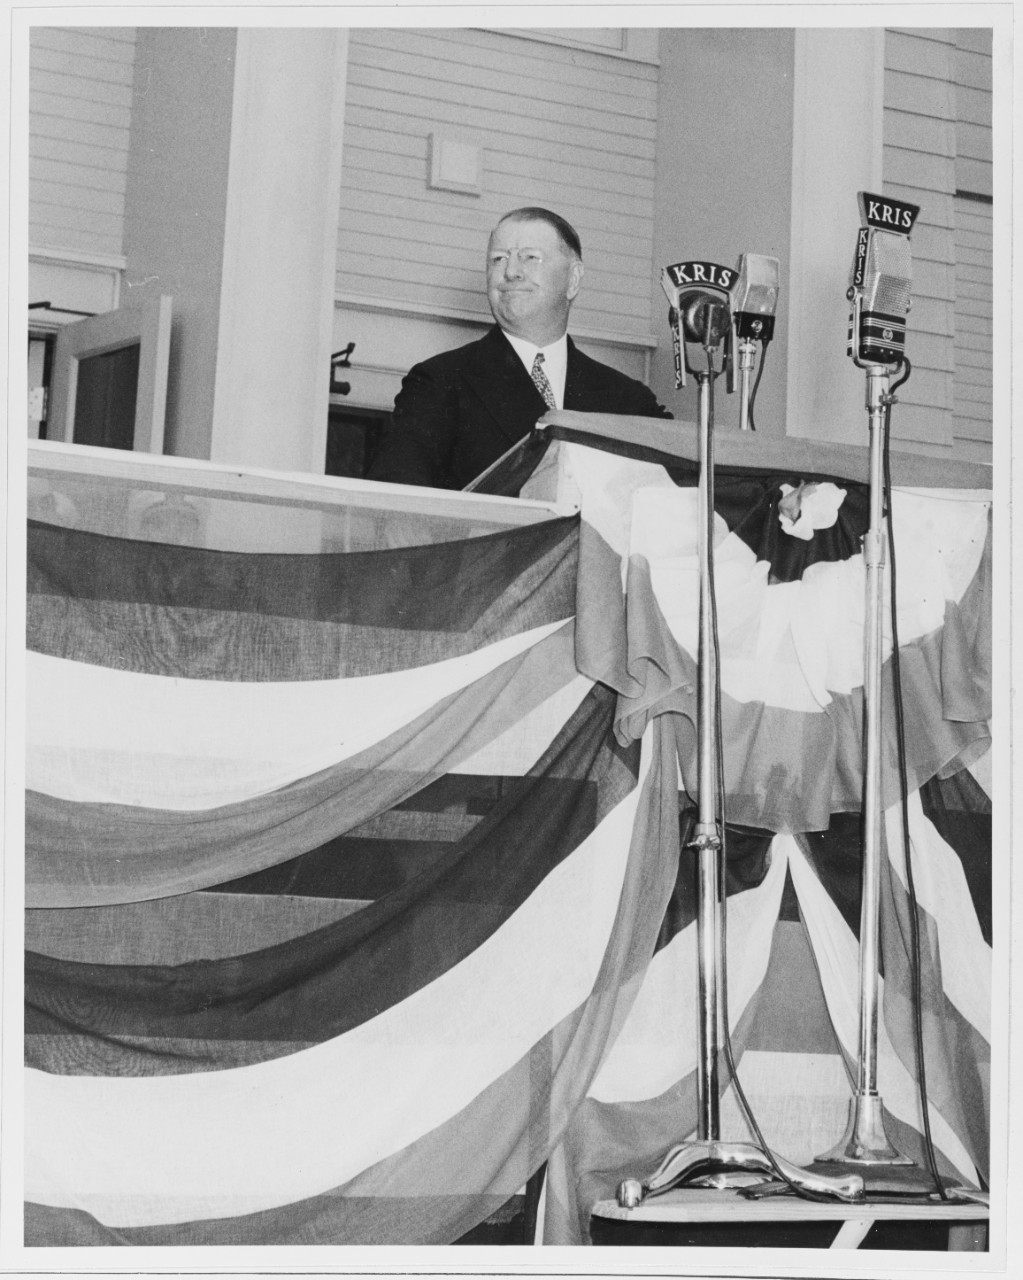 Dedication Ceremonies. U.S. Naval Air Station, Corpus Christi, Texas. March 12, 1941